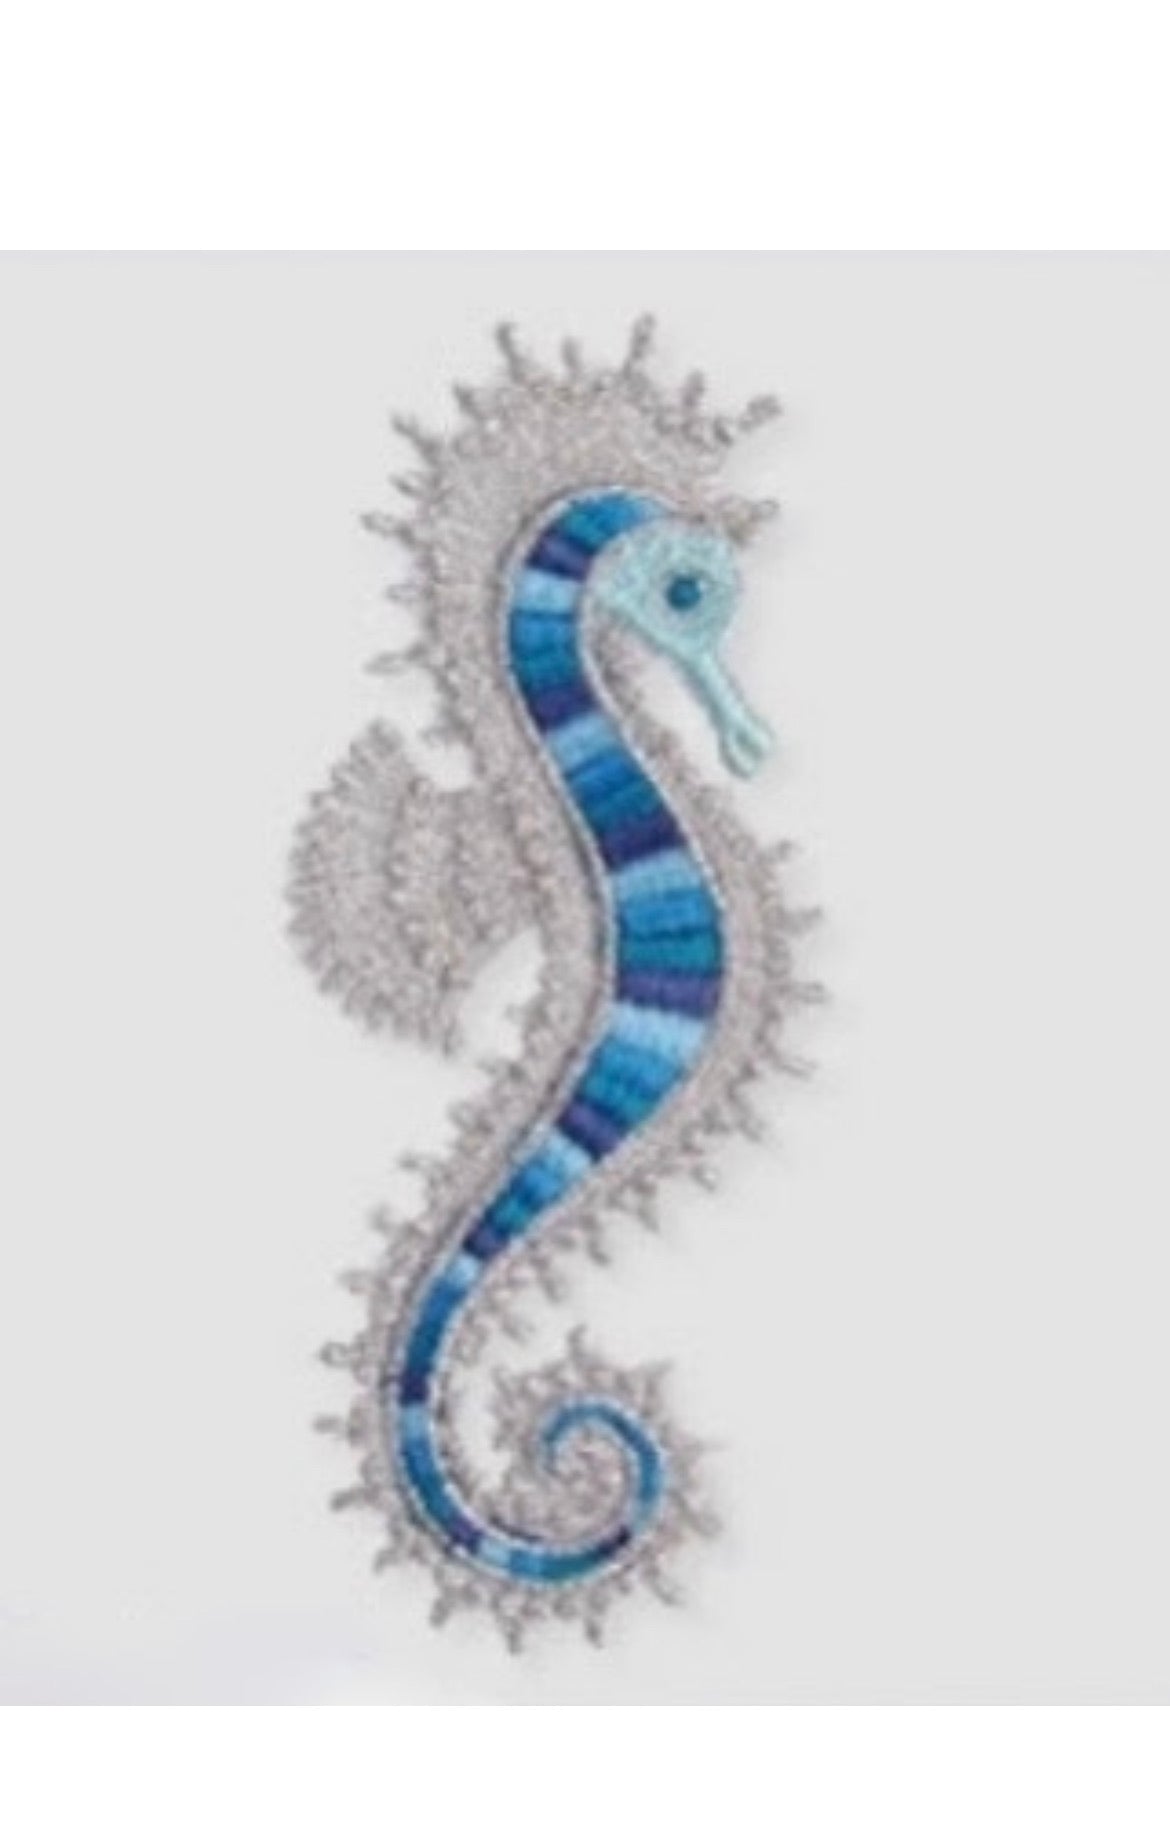 Embroidered Seahorse Bath Hand Towel. Gorgeous Ocean  Seahorse in Blue Shades